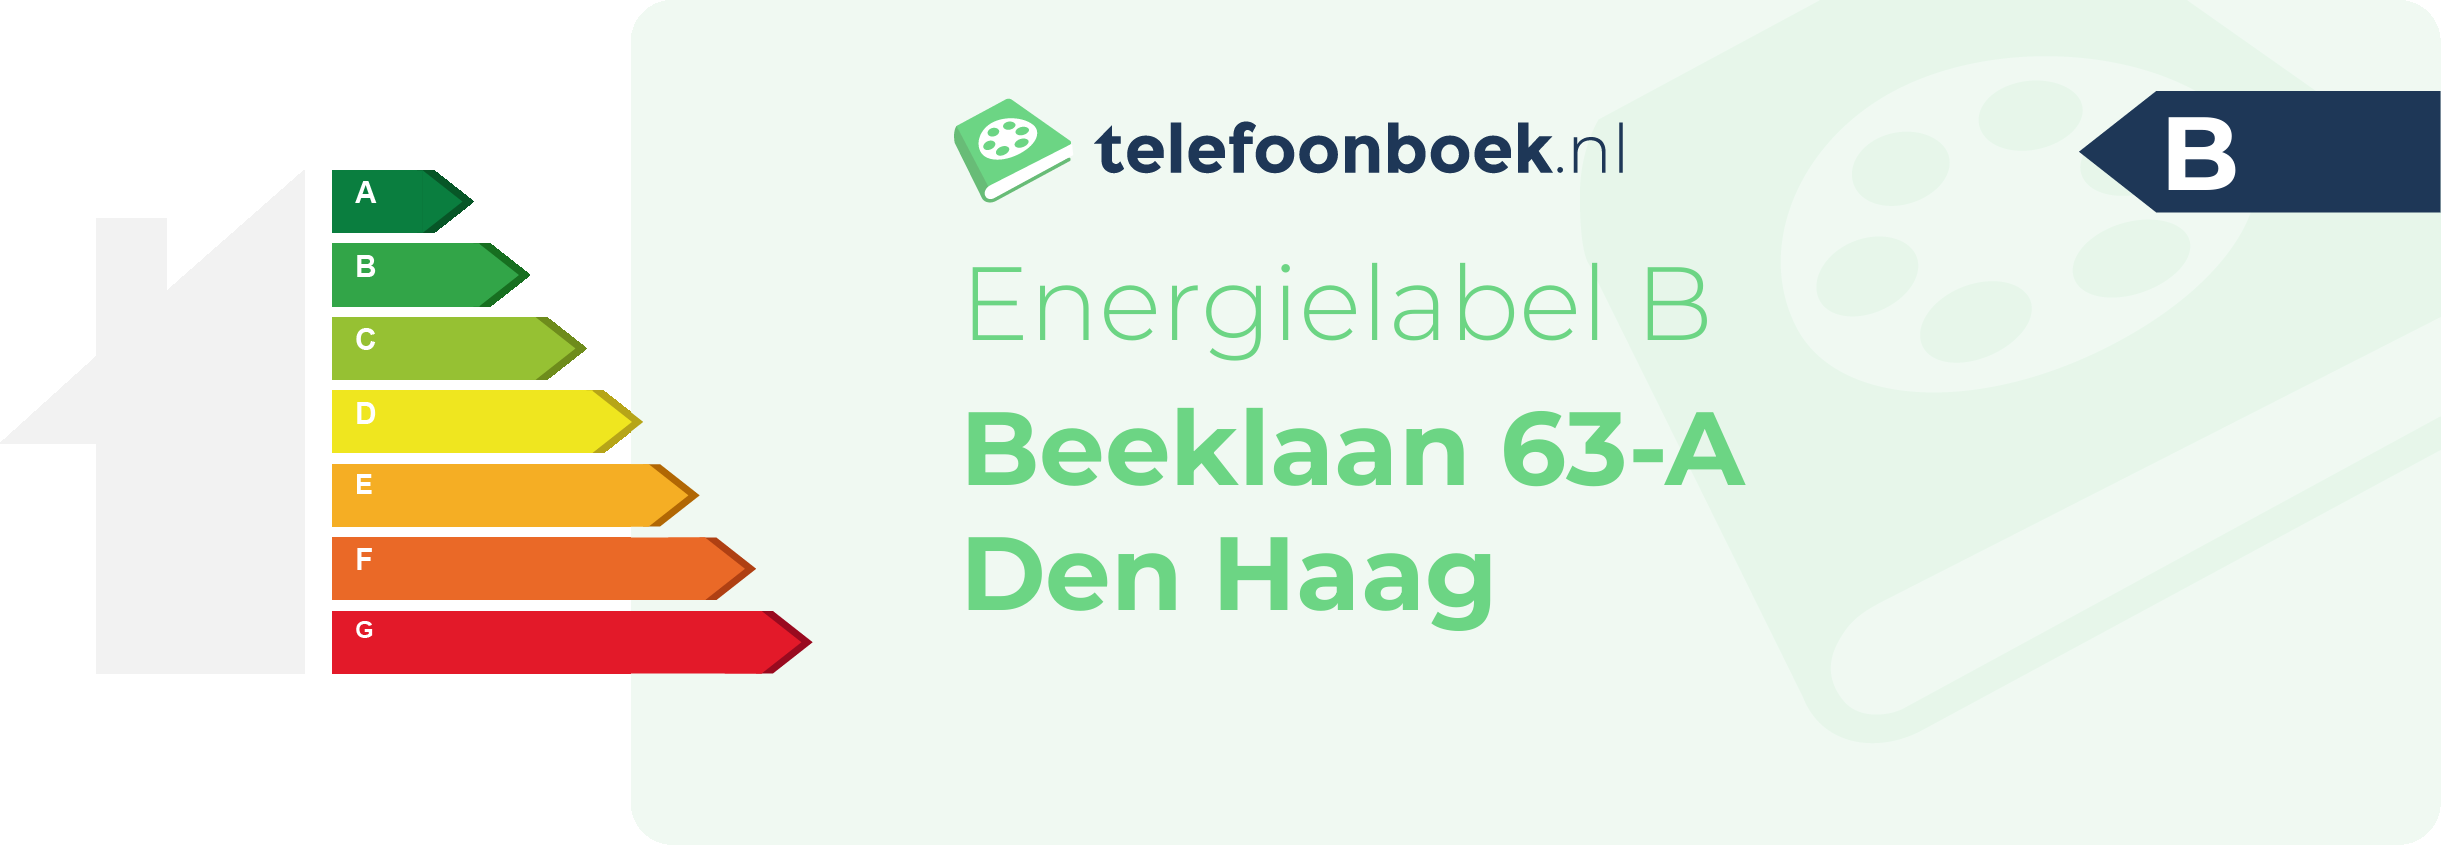 Energielabel Beeklaan 63-A Den Haag